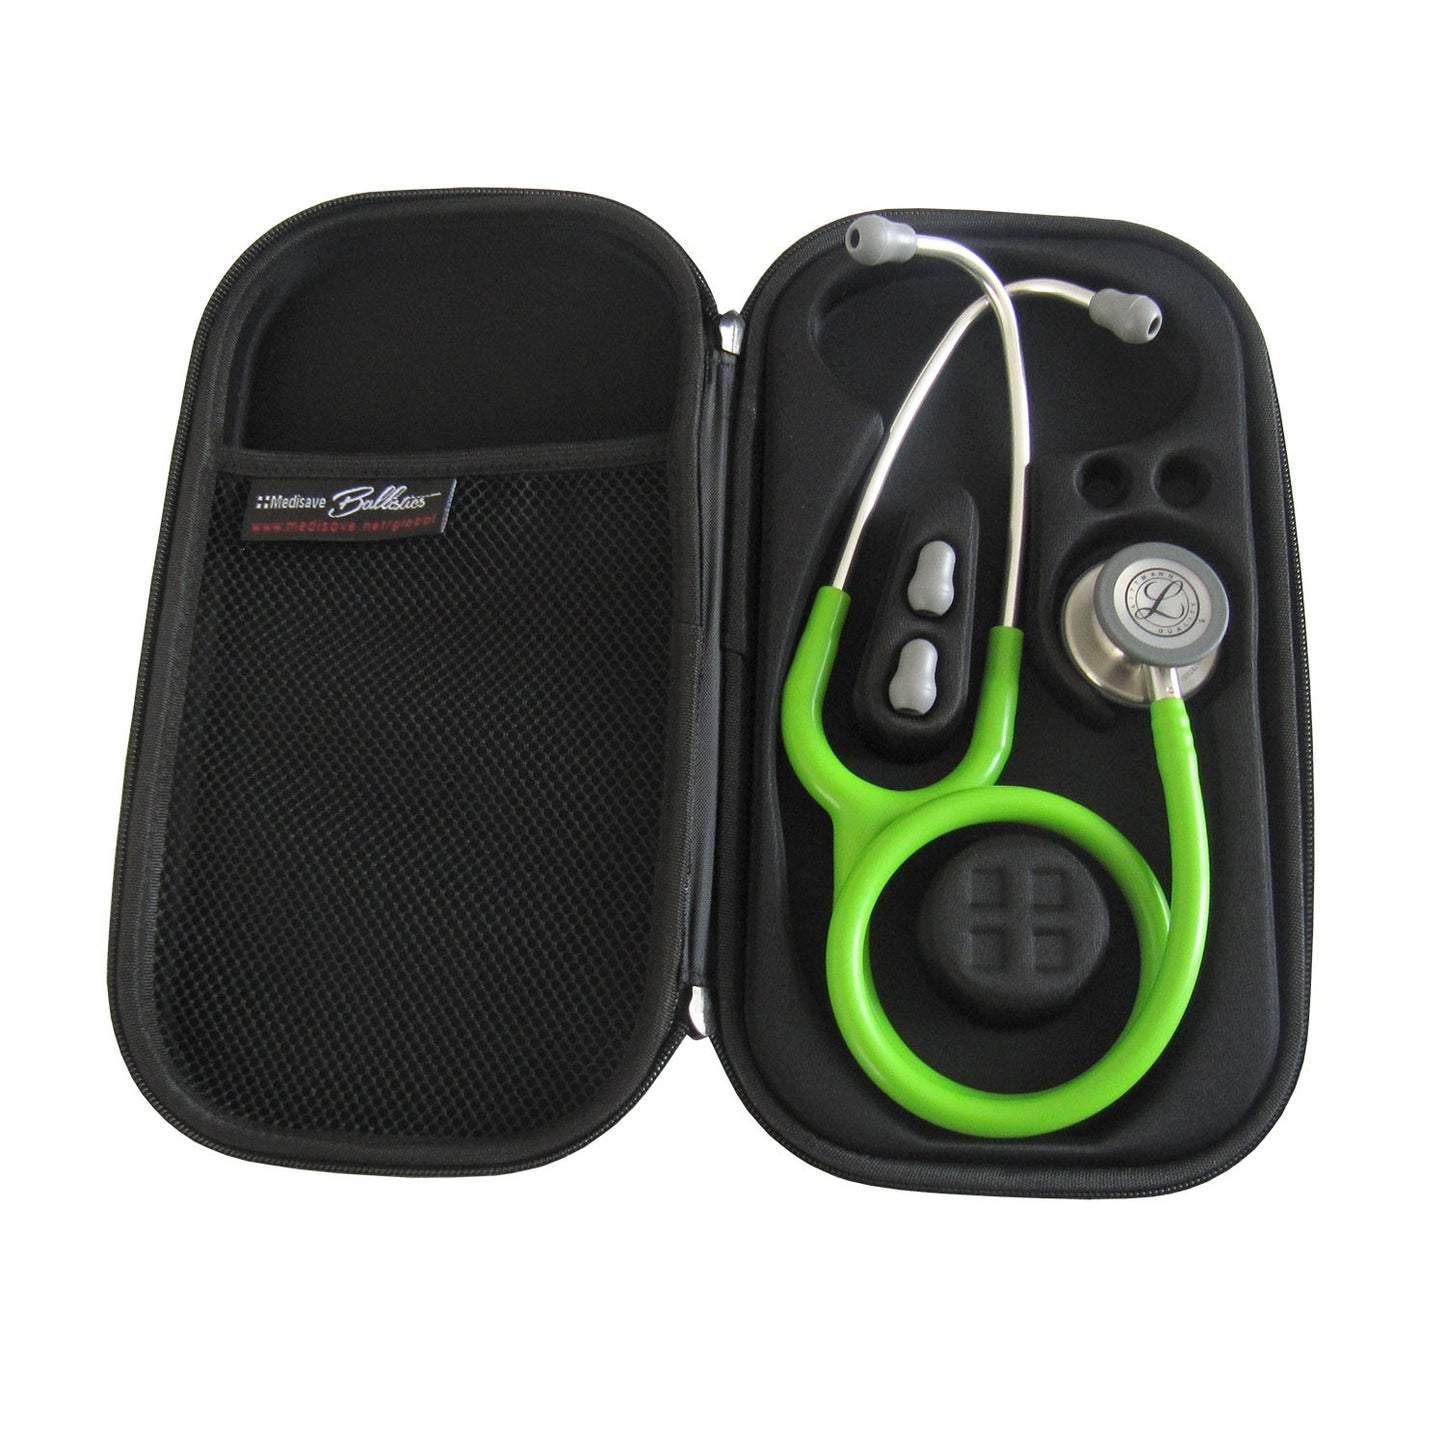 Medisave Ballistics Premium Classic Stethoscope Case - Smoke